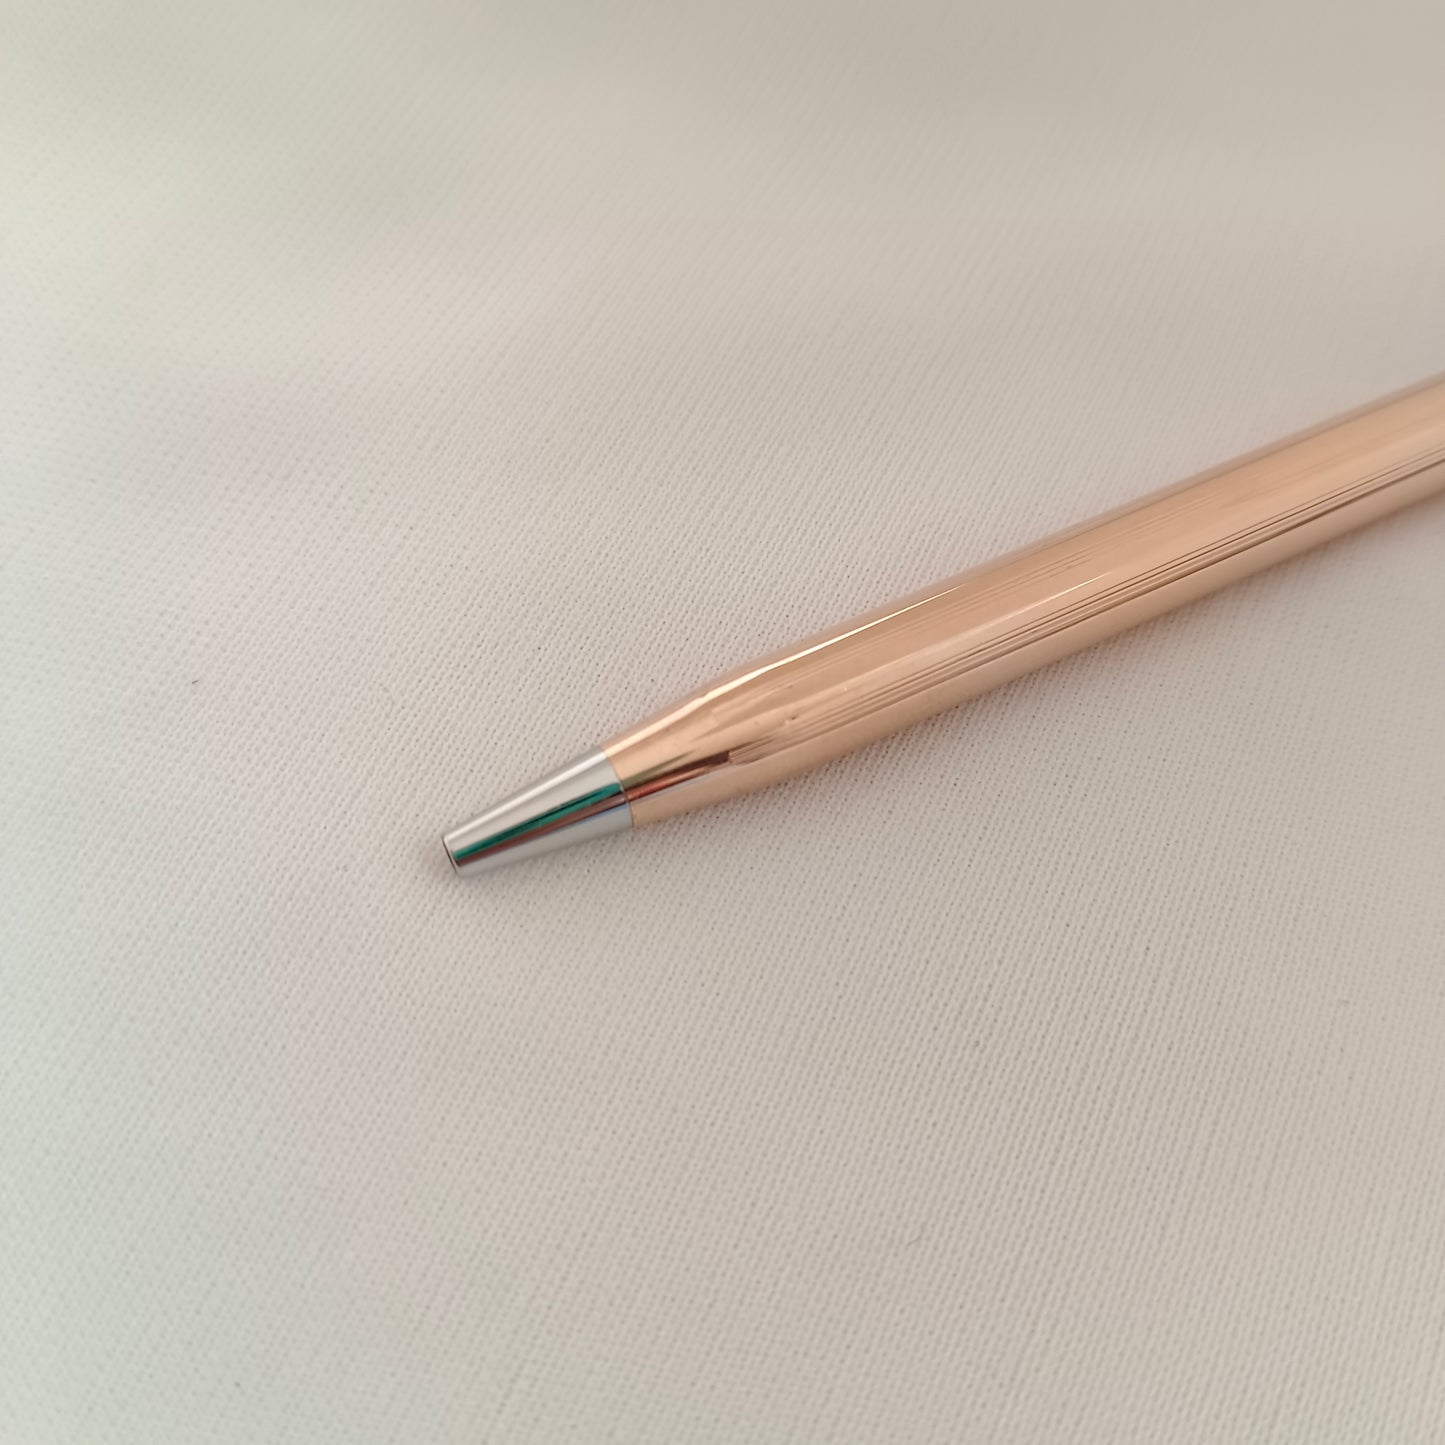 Cross Century 1/20 14kt Rolled Gold Ballpoint Pen - Made in Ireland